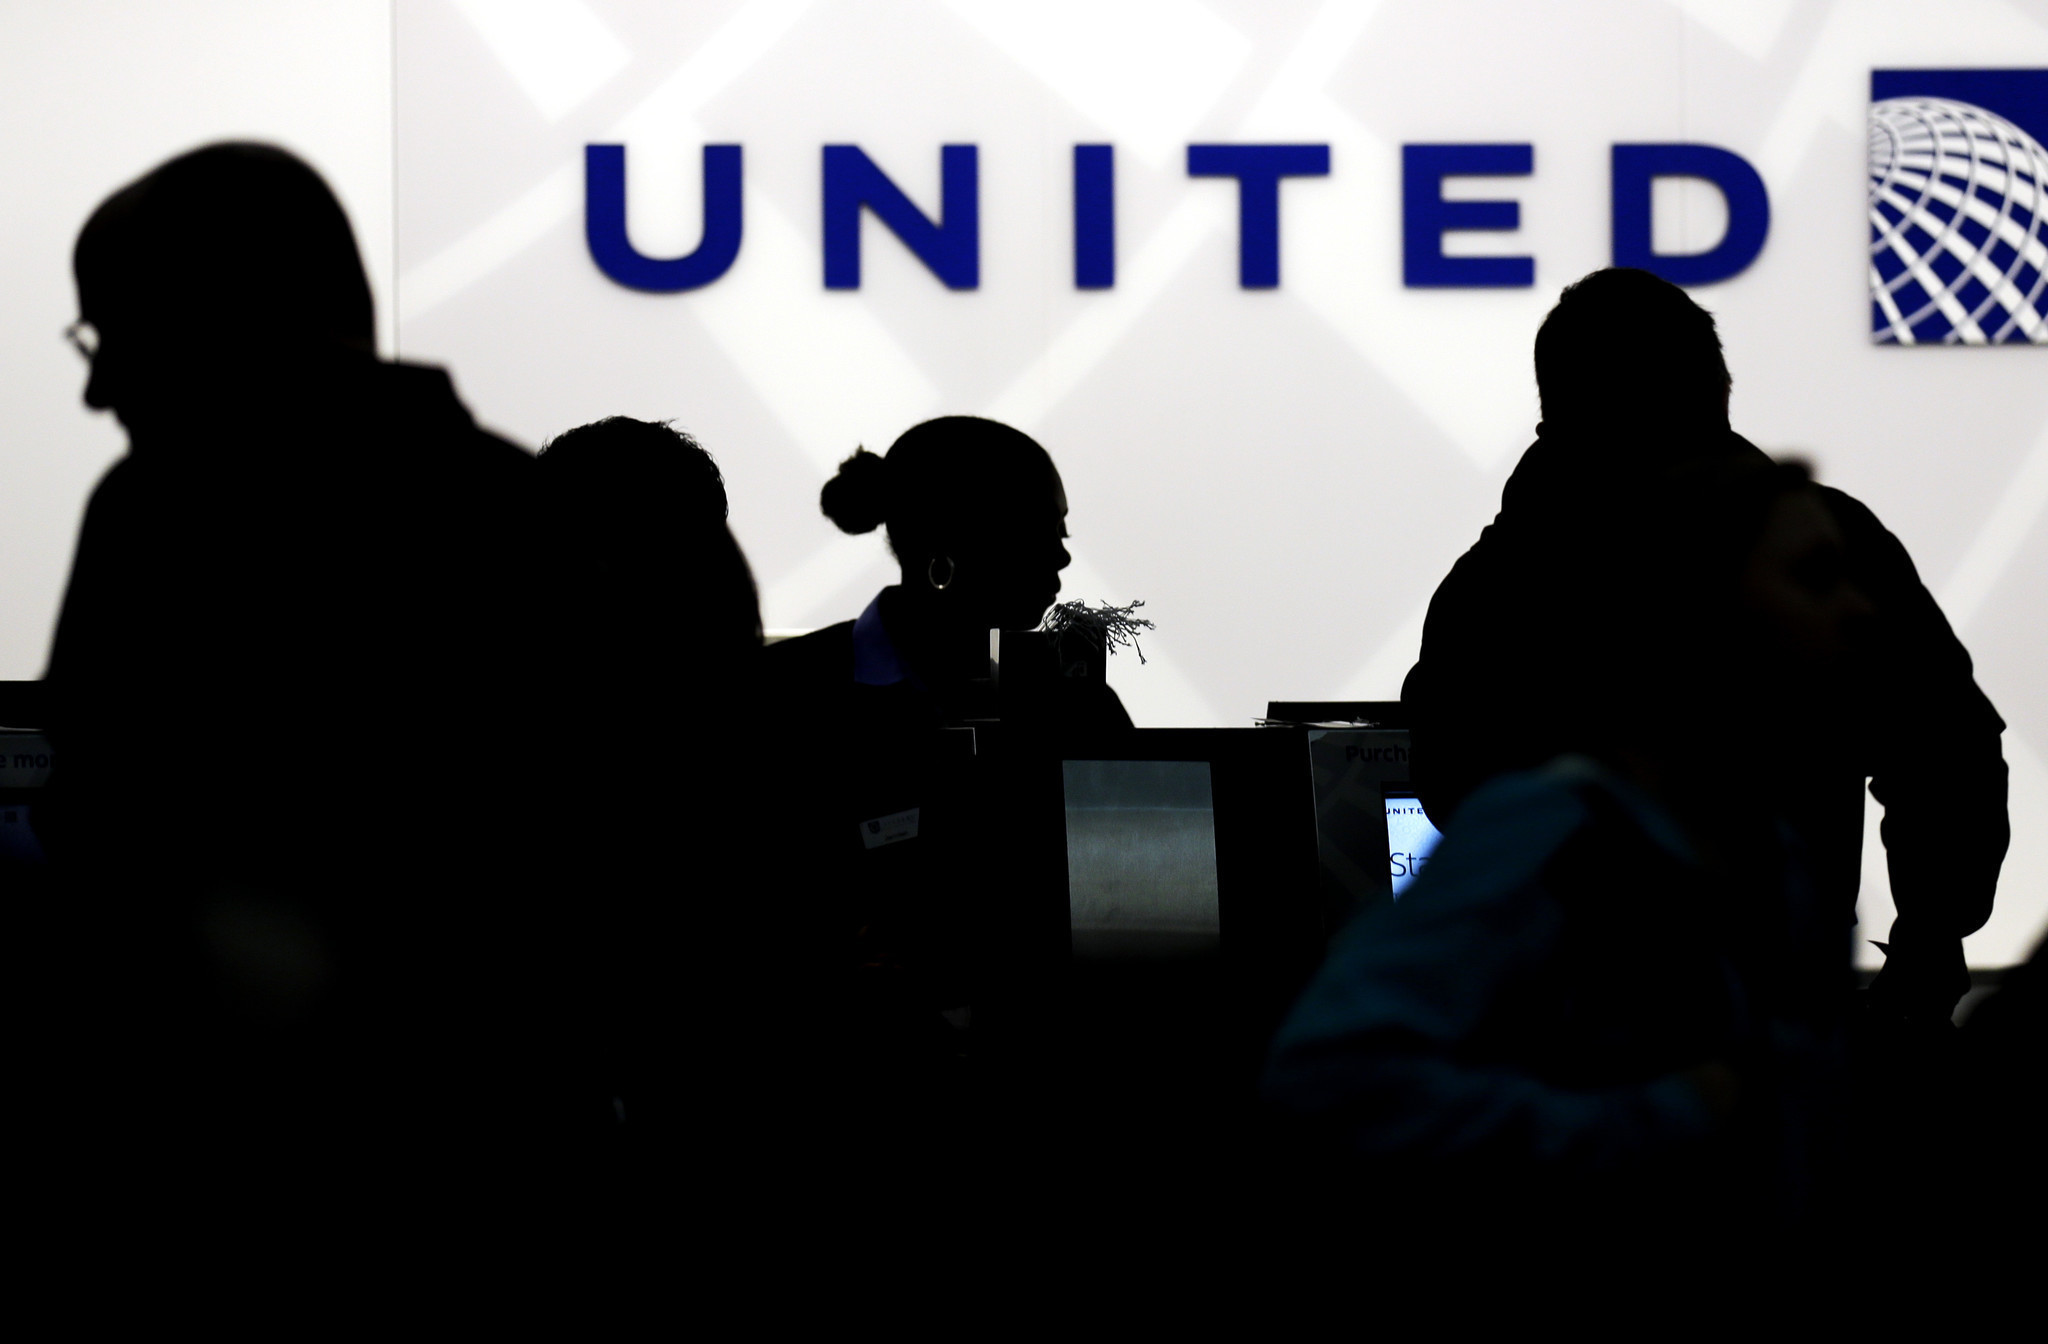 Let Richard Branson kill United Airlines - LA Times - Los Angeles Times